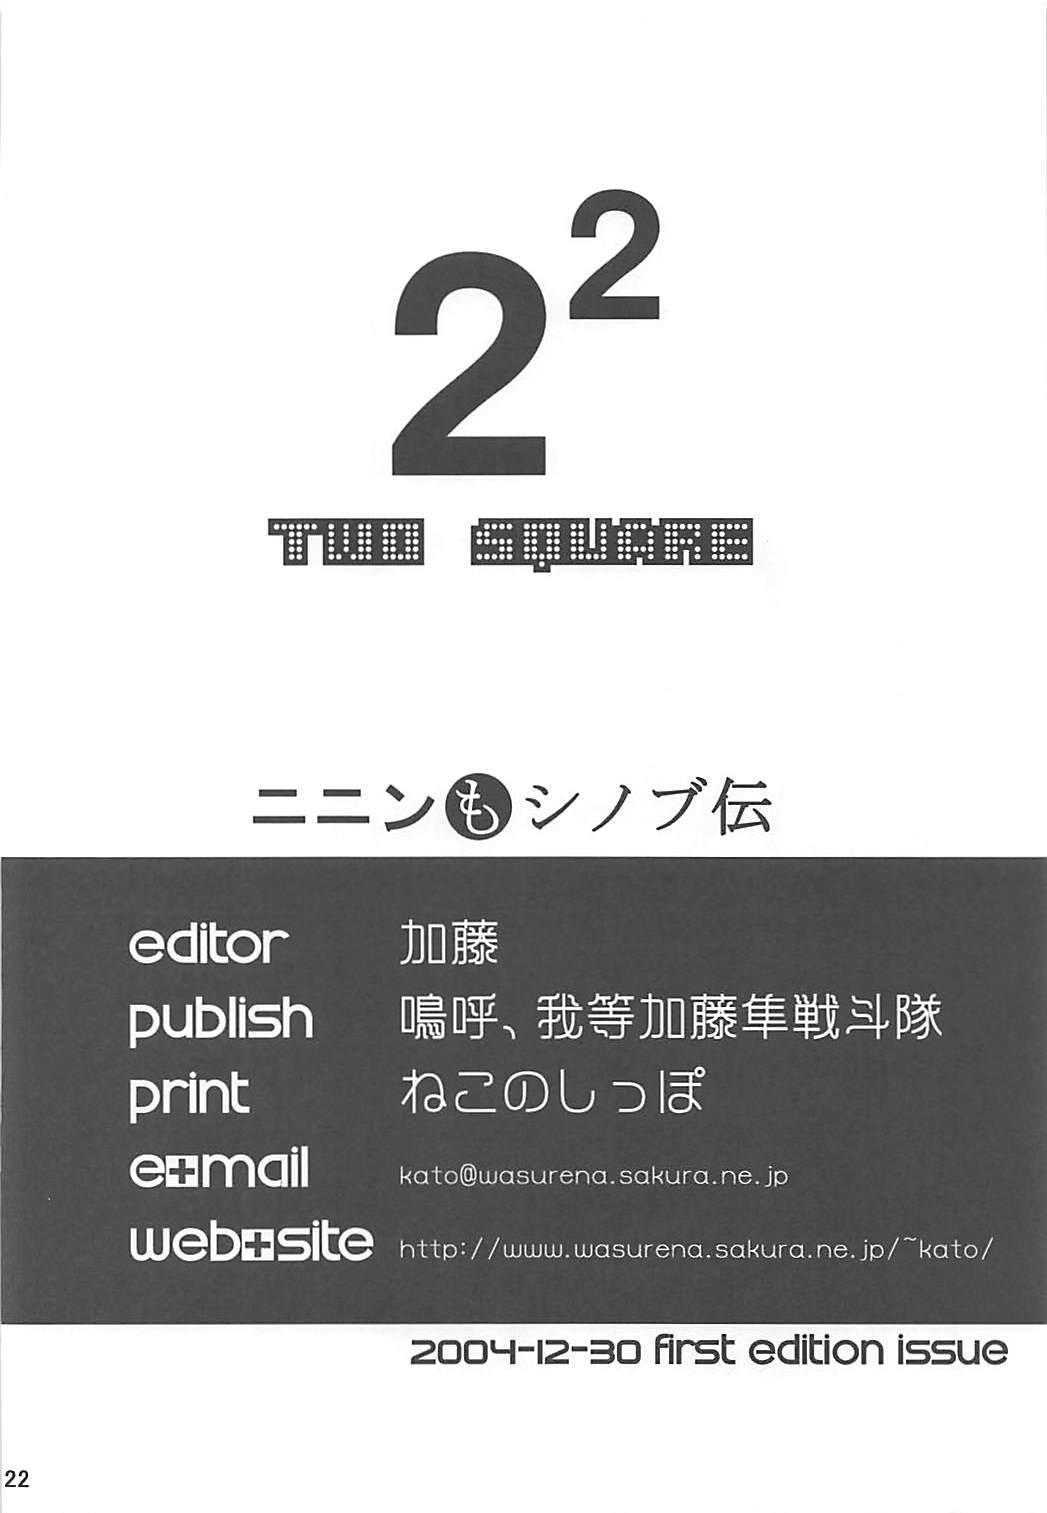 Jockstrap 2²=Shinobuden - 2x2 shinobuden Sixtynine - Page 21